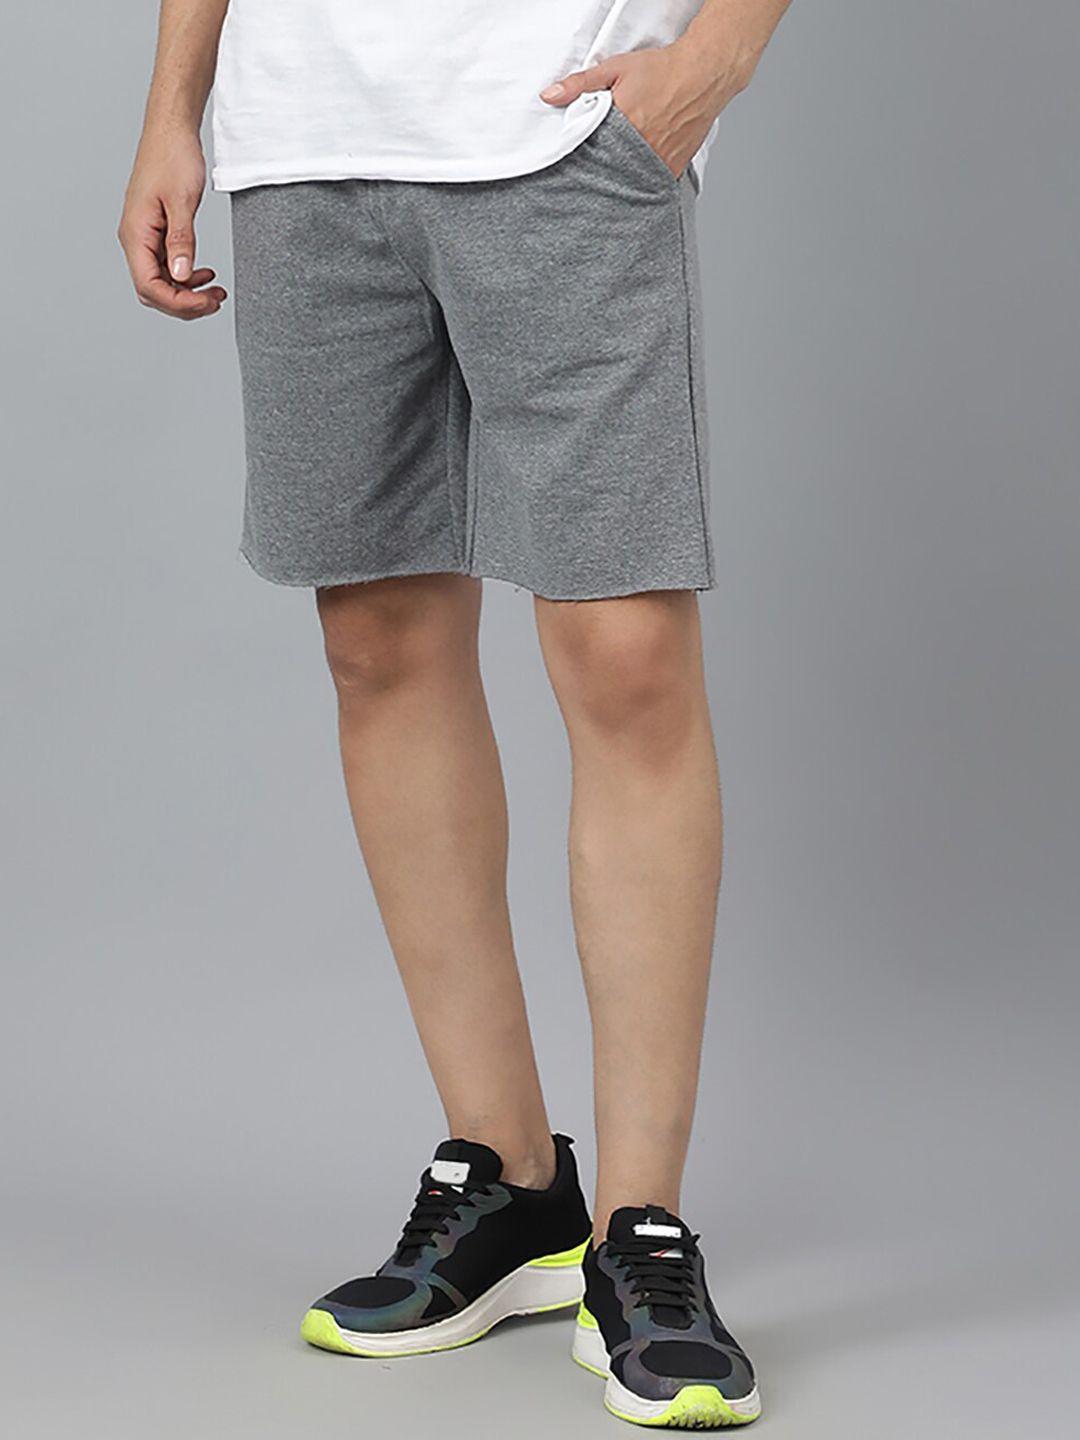 kotty men grey mid-rise regular shorts